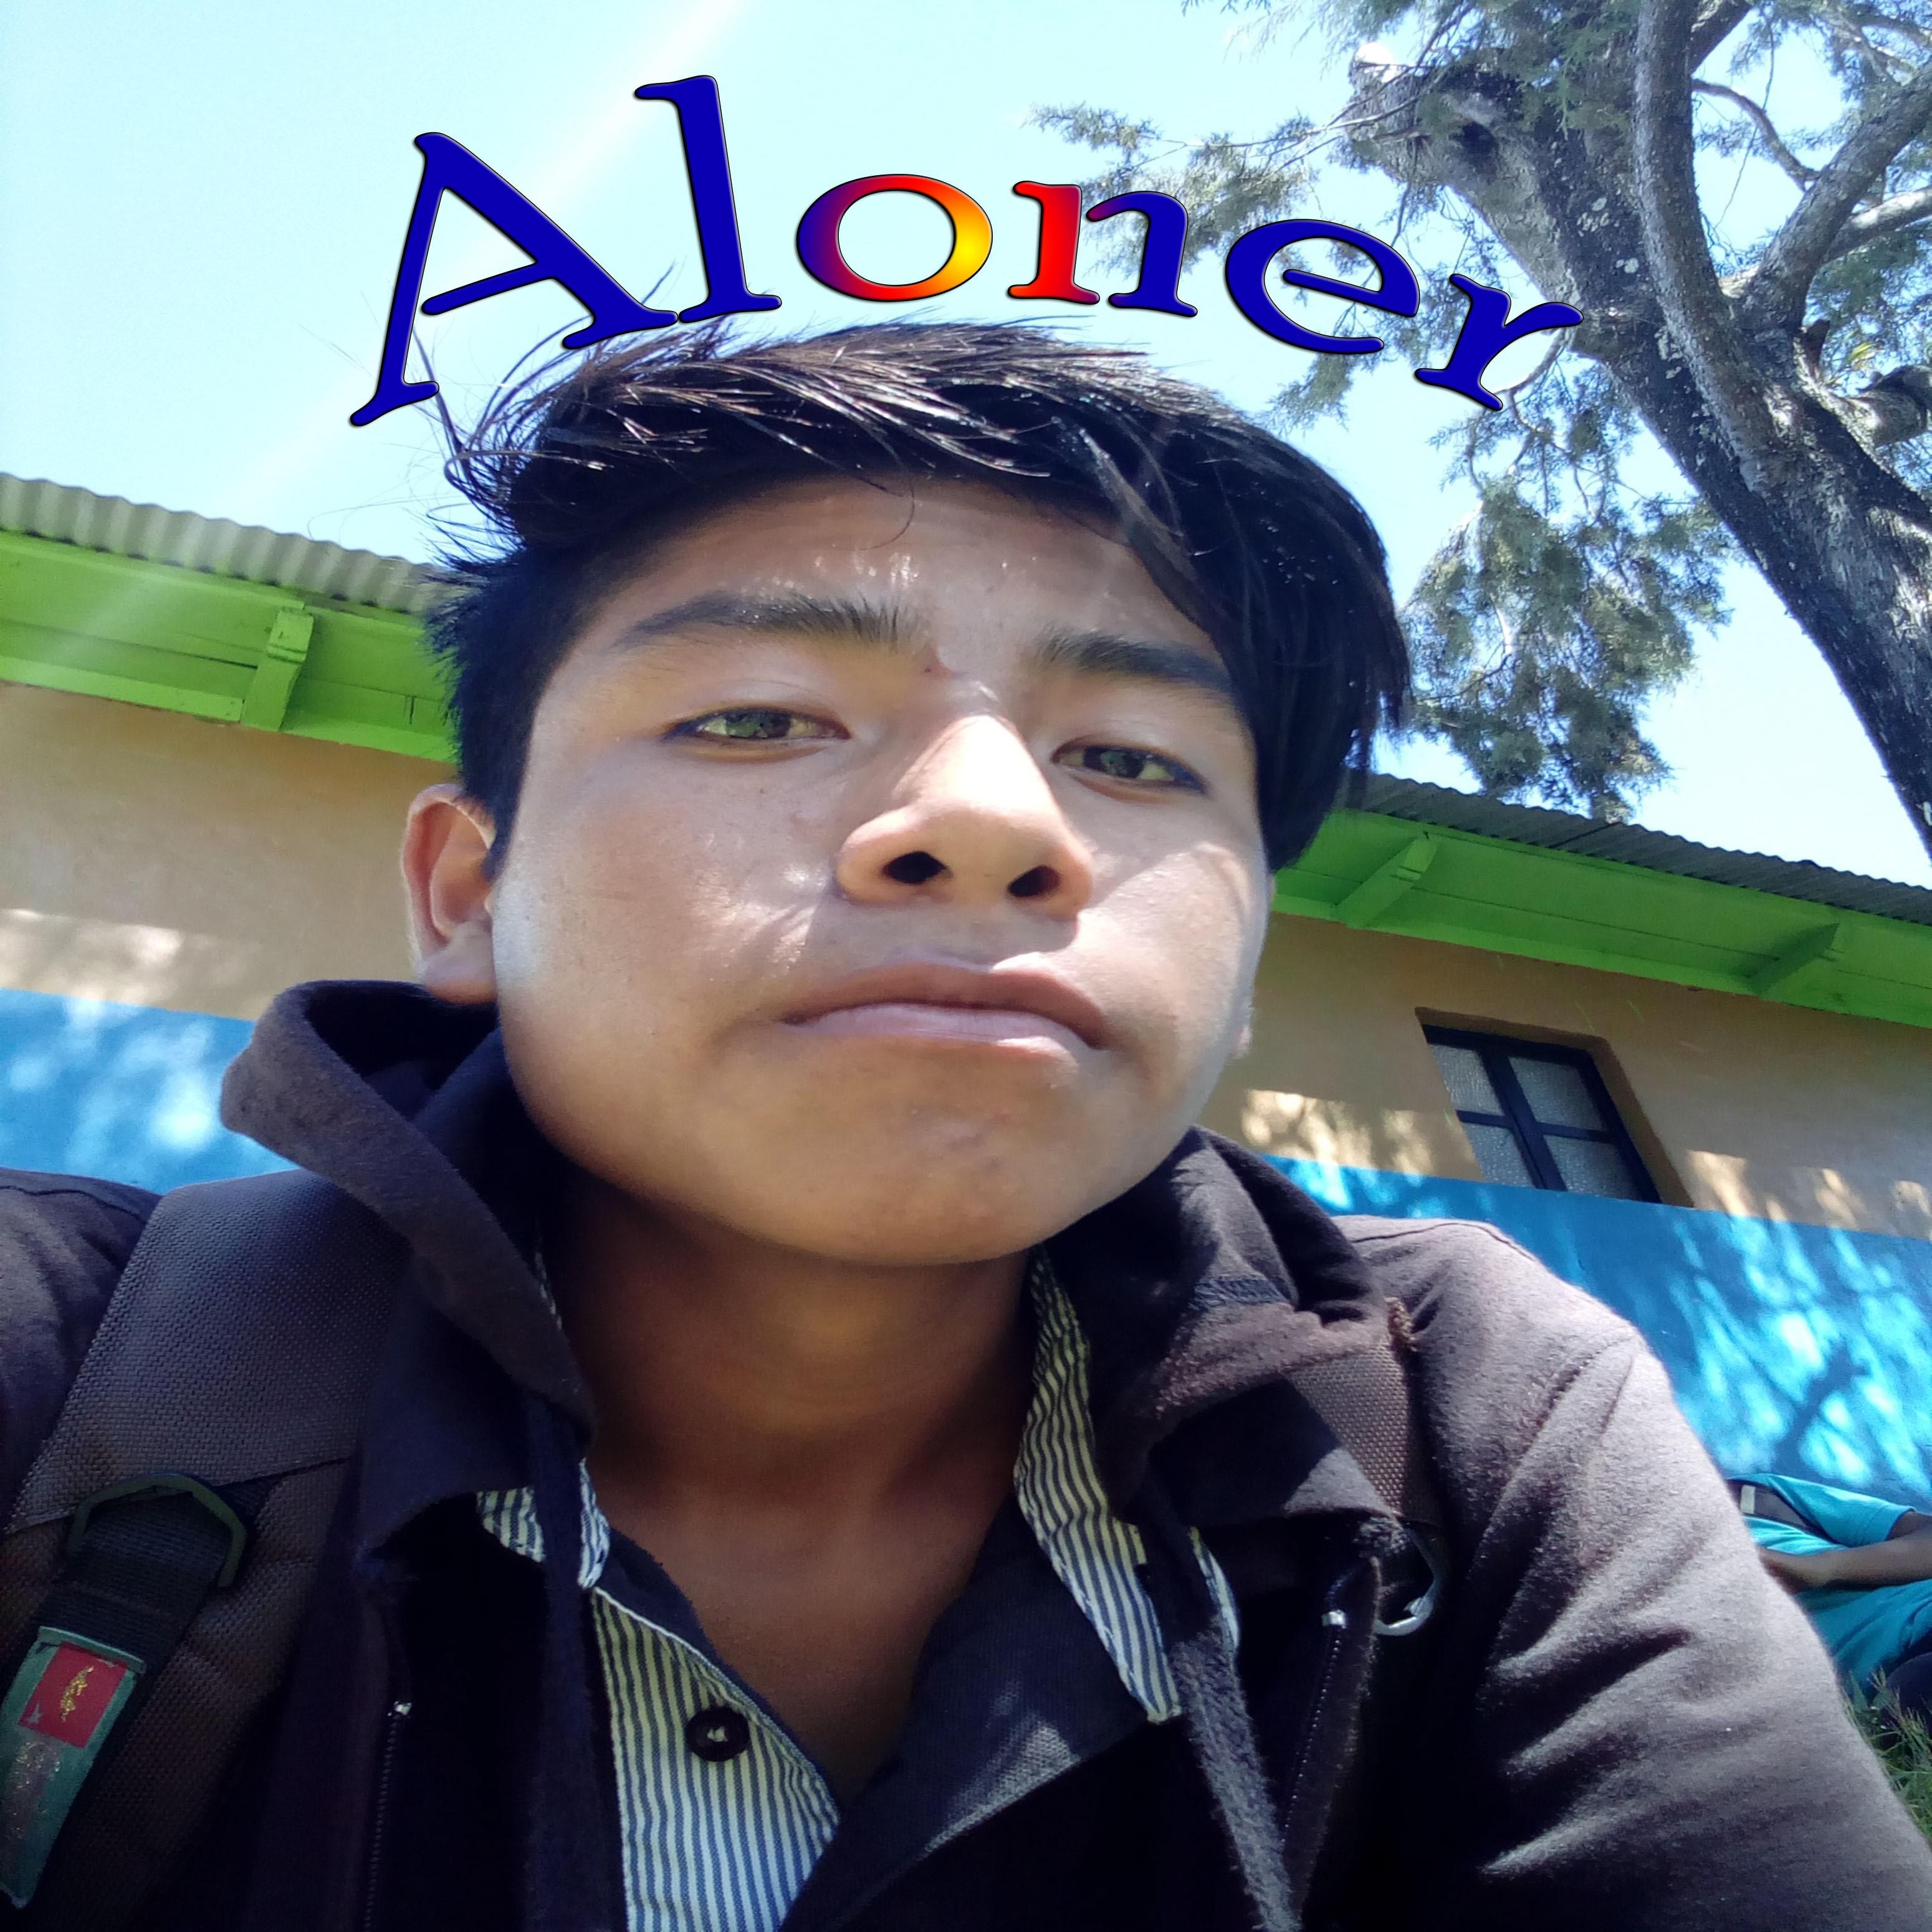 Aloner